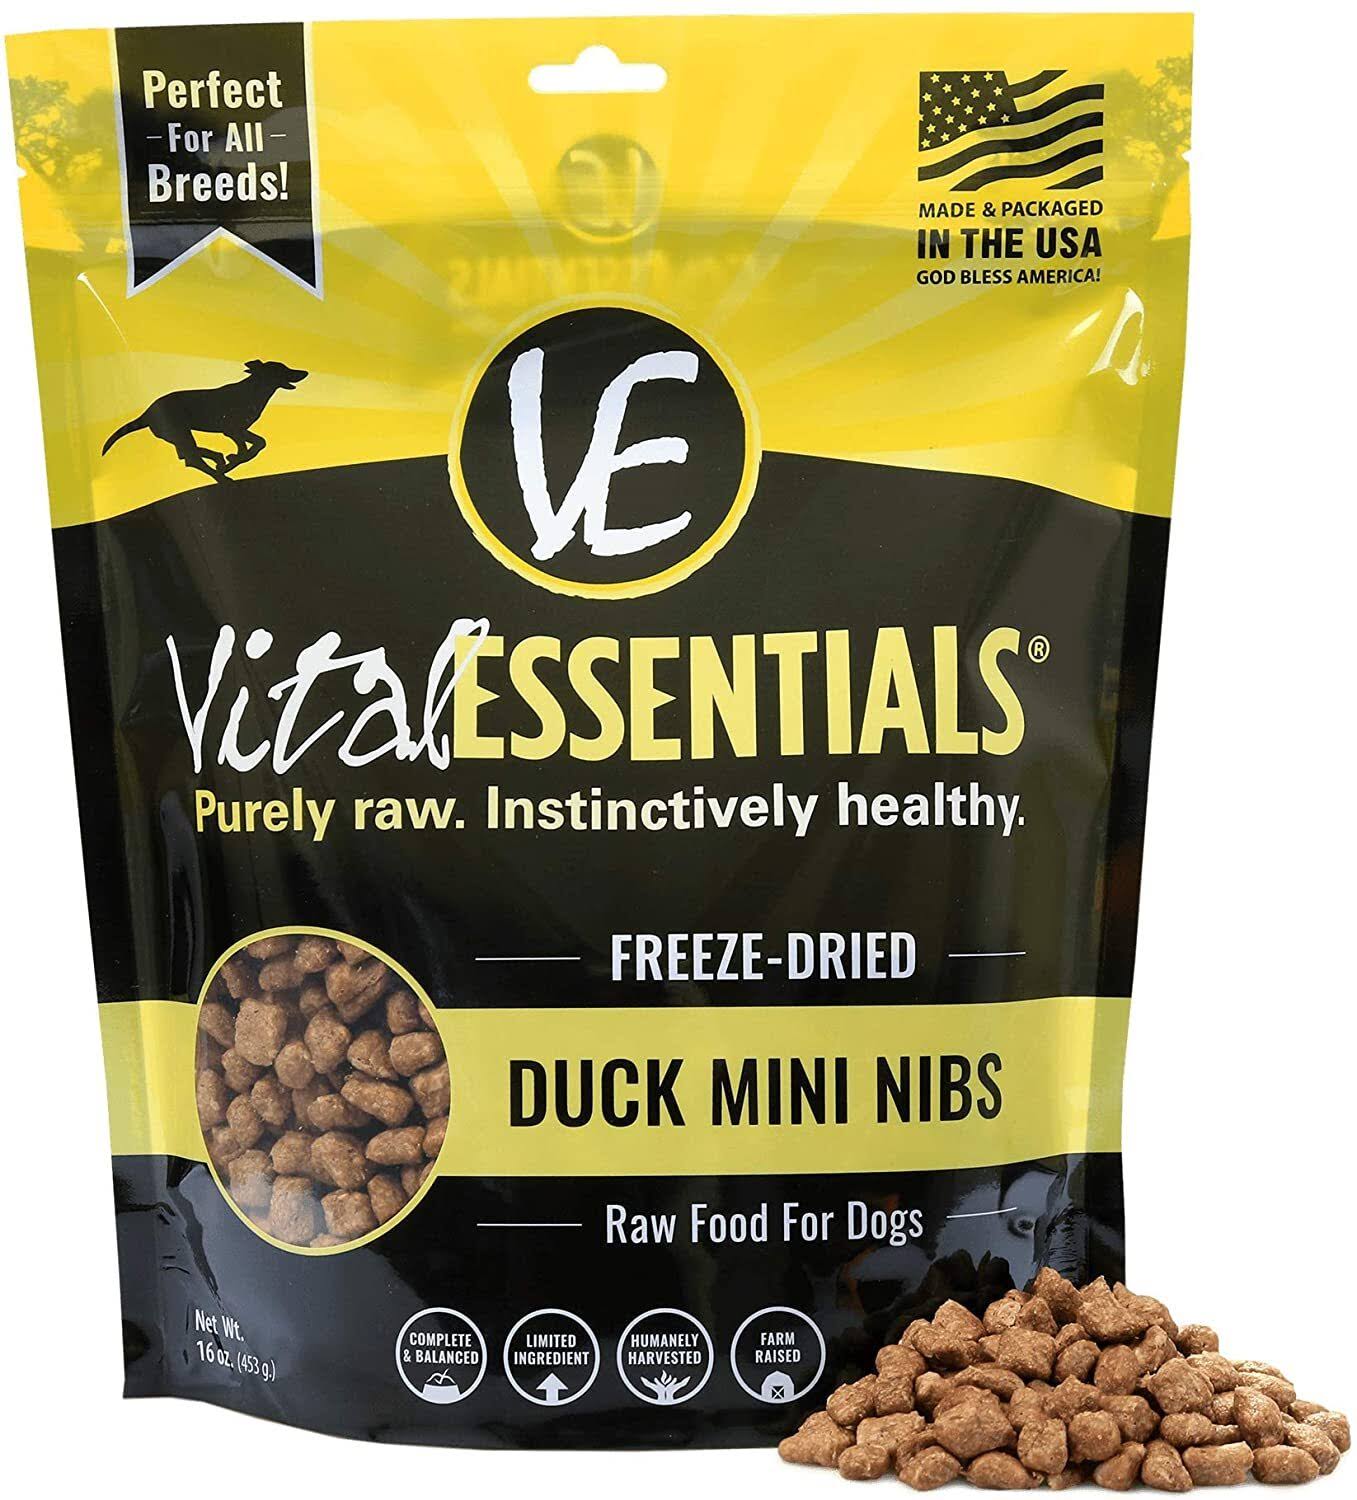 Vital Essentials Freeze-Dried Duck Mini Nibs Dog Food - 1 lb. bag